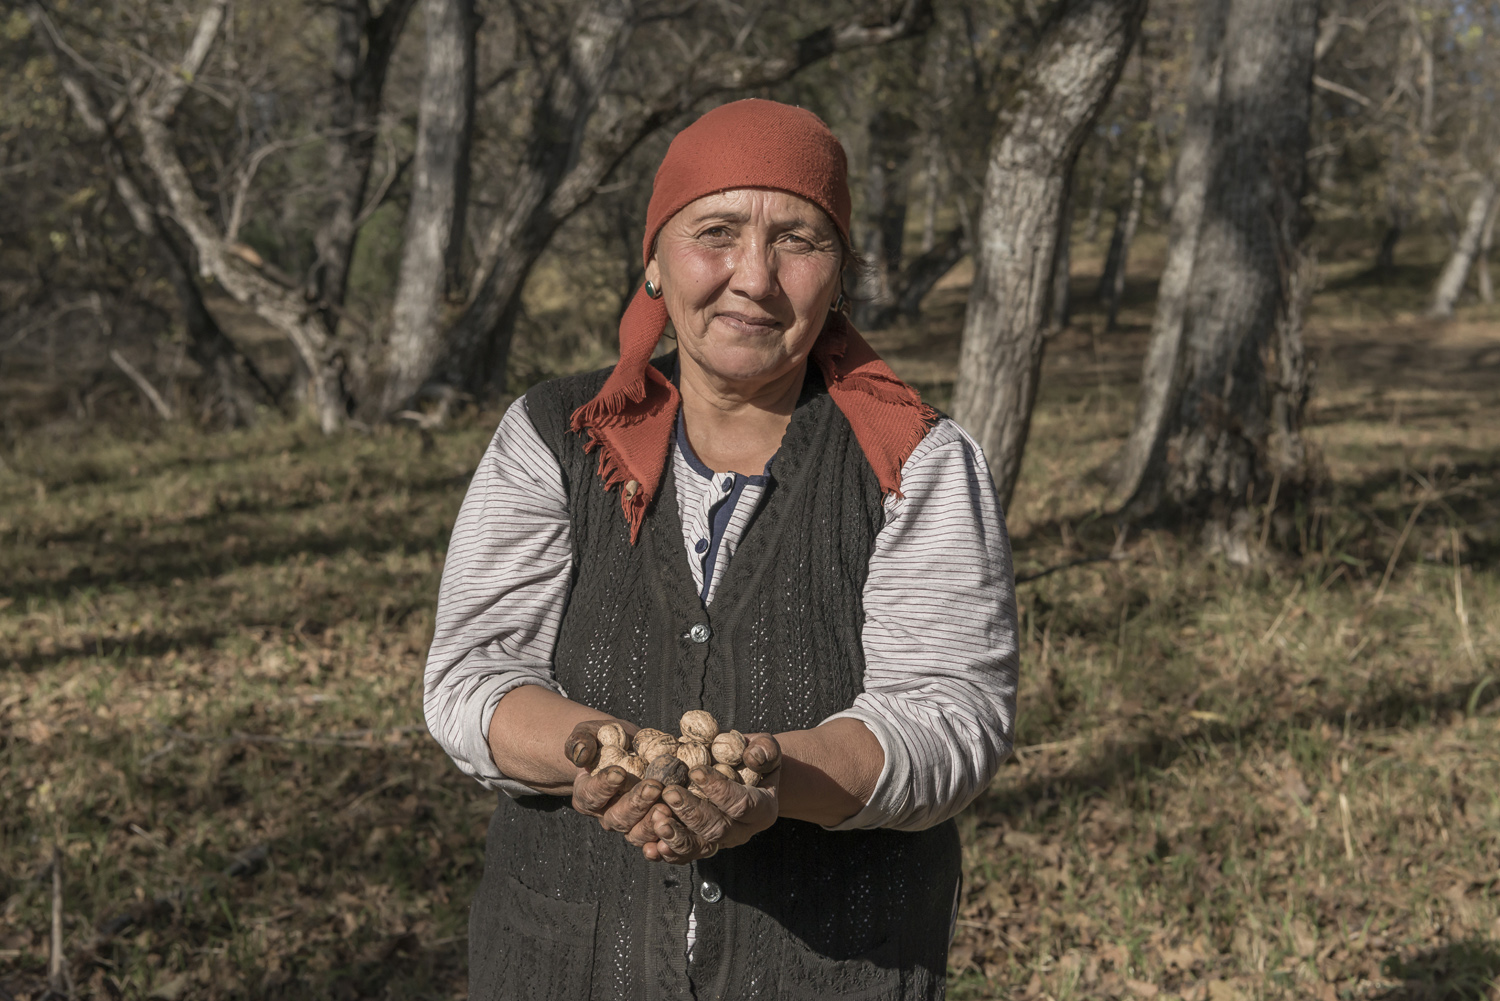 walnuts-picking-kyrgyzstan-child-arslanbob-soviet-union-russia-woman-handful-walnuts.jpg